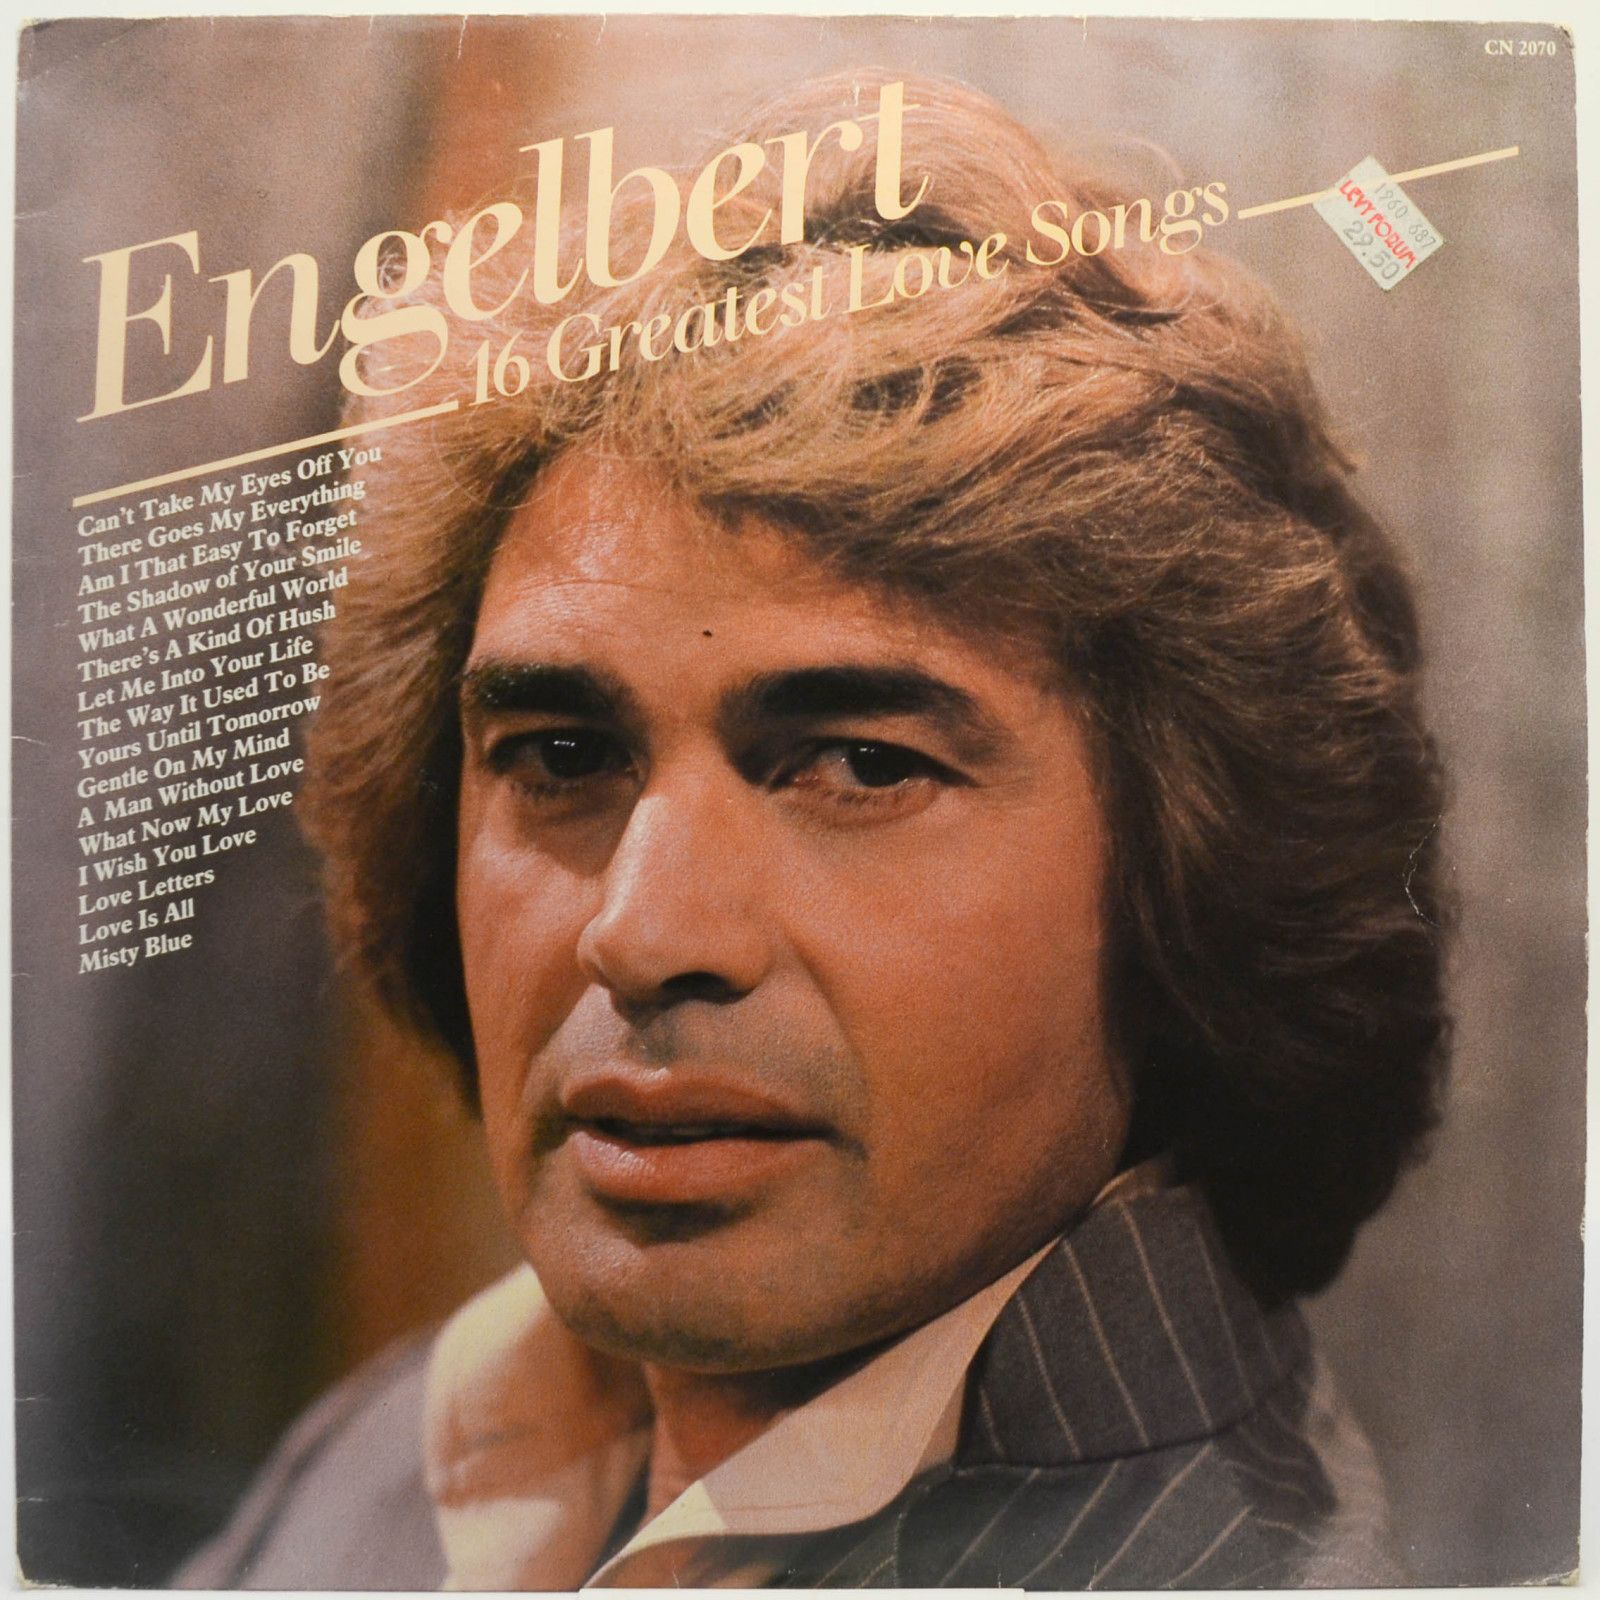 Engelbert Humperdinck — 16 Greatest Love Songs (UK), 1984